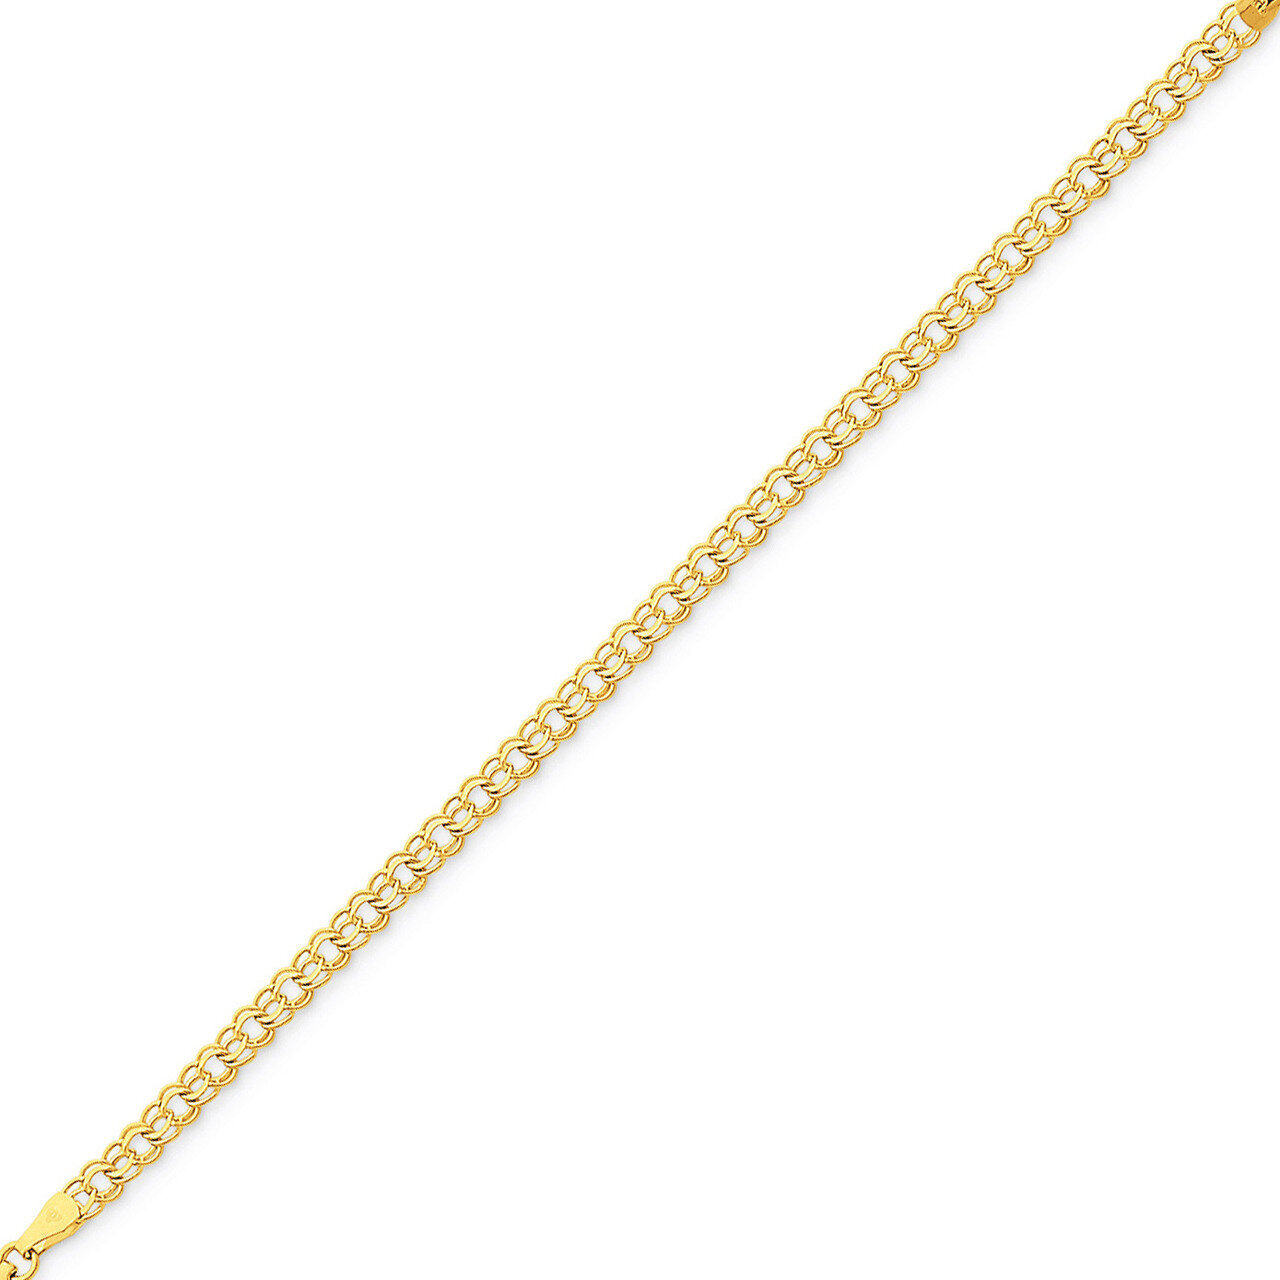 Double Link Charm Bracelet 8 Inch 14k Gold DO506-8